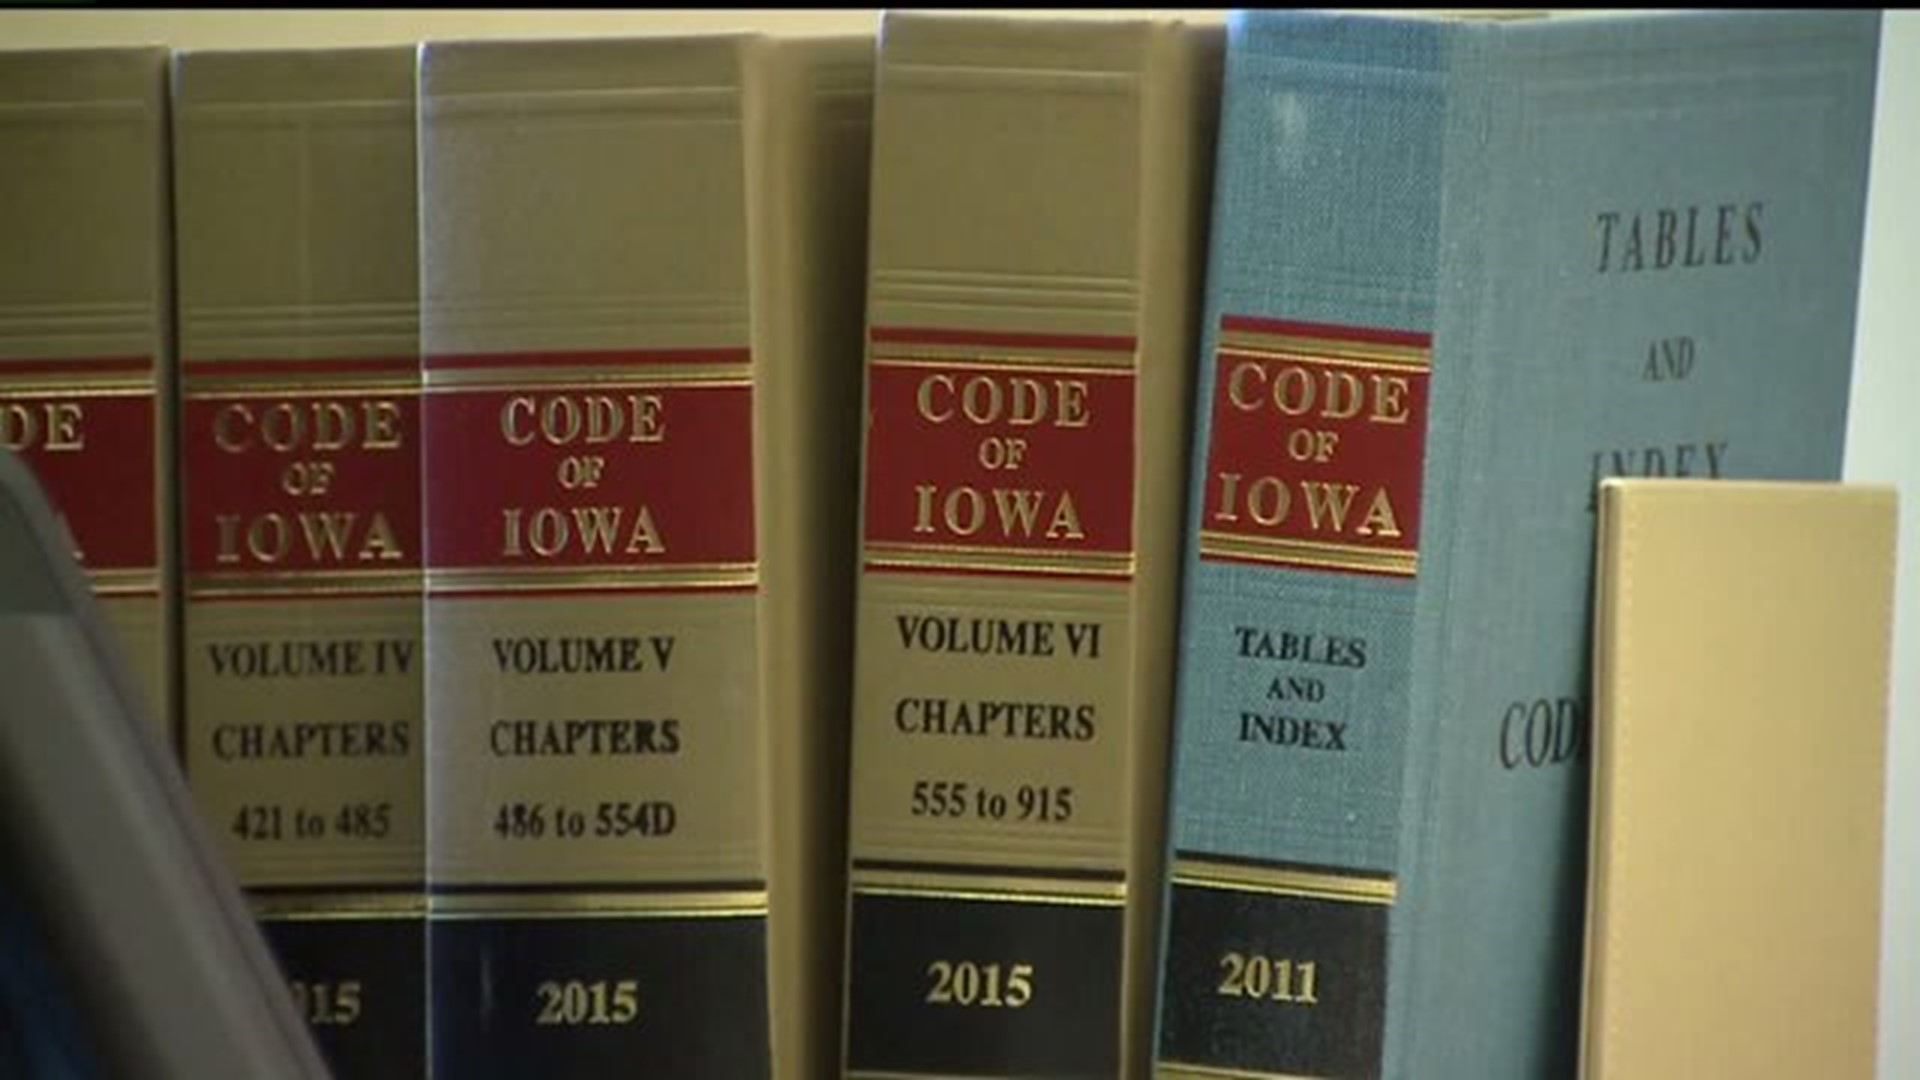 Man wins custody issue through state of Iowa